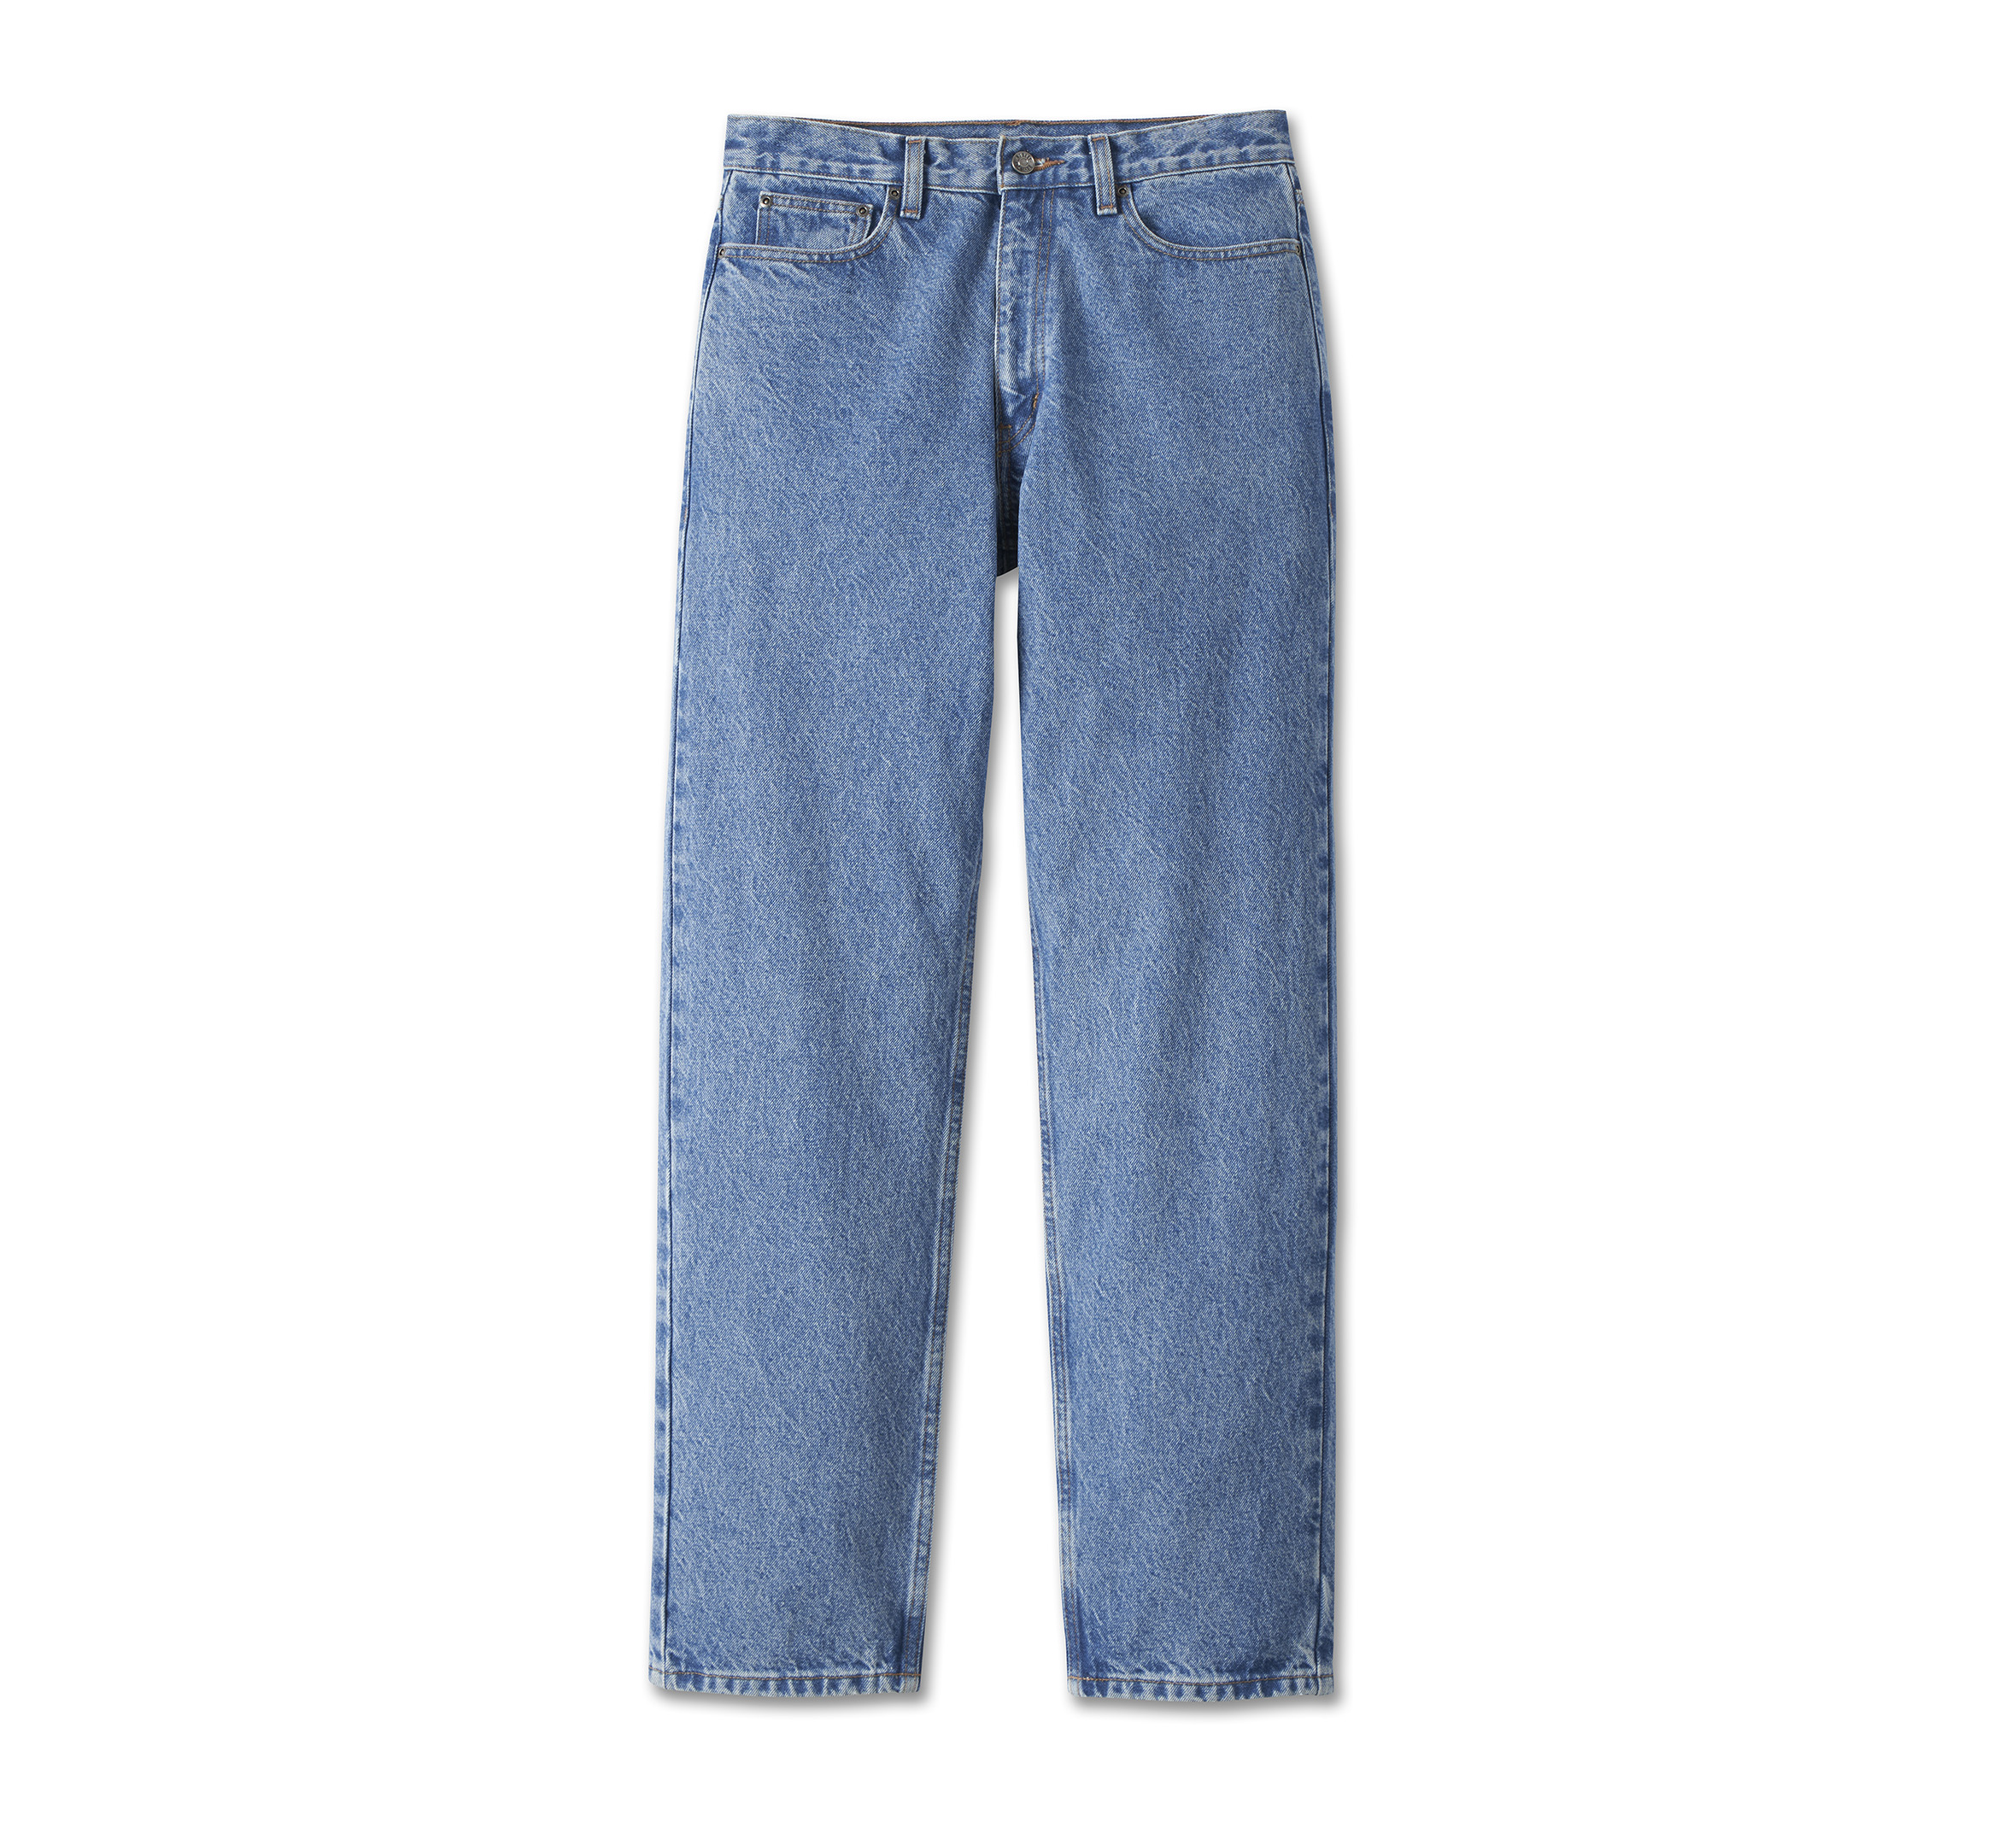 Levi's 560 Comfort Fit Straight Leg Denim Blue Jeans Distressed Men's 34x32